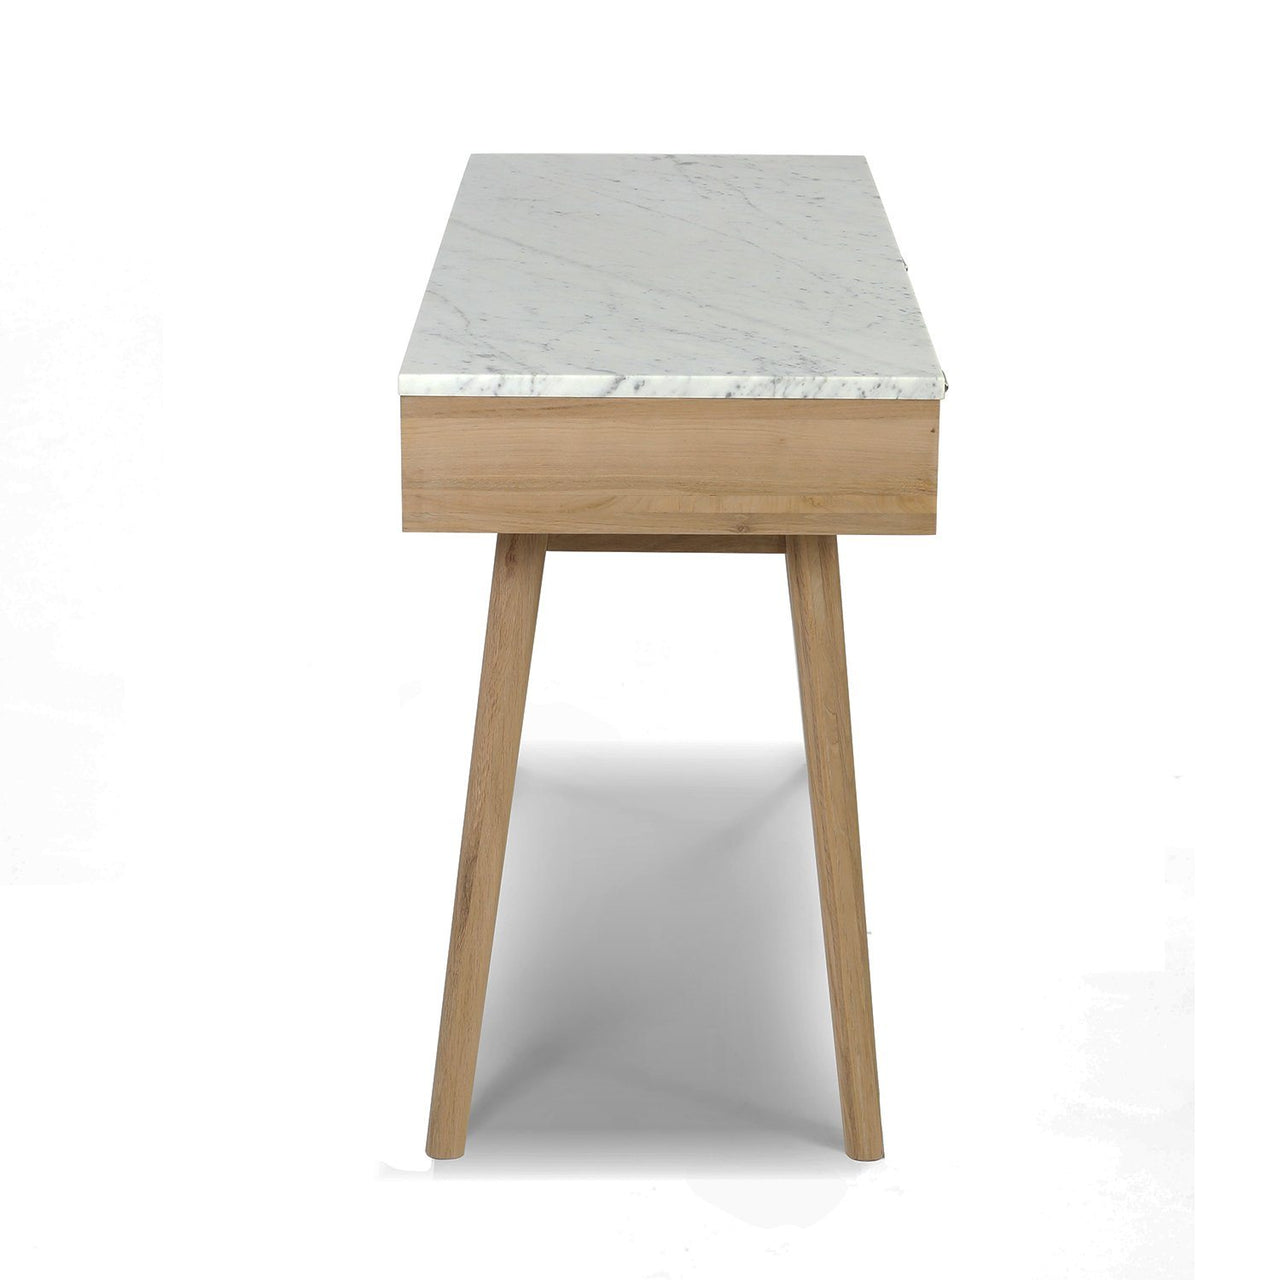 Viola 44" Rectangular Italian Carrara White Marble Writing Desk with Legs Writing Desk The Bianco Collection 